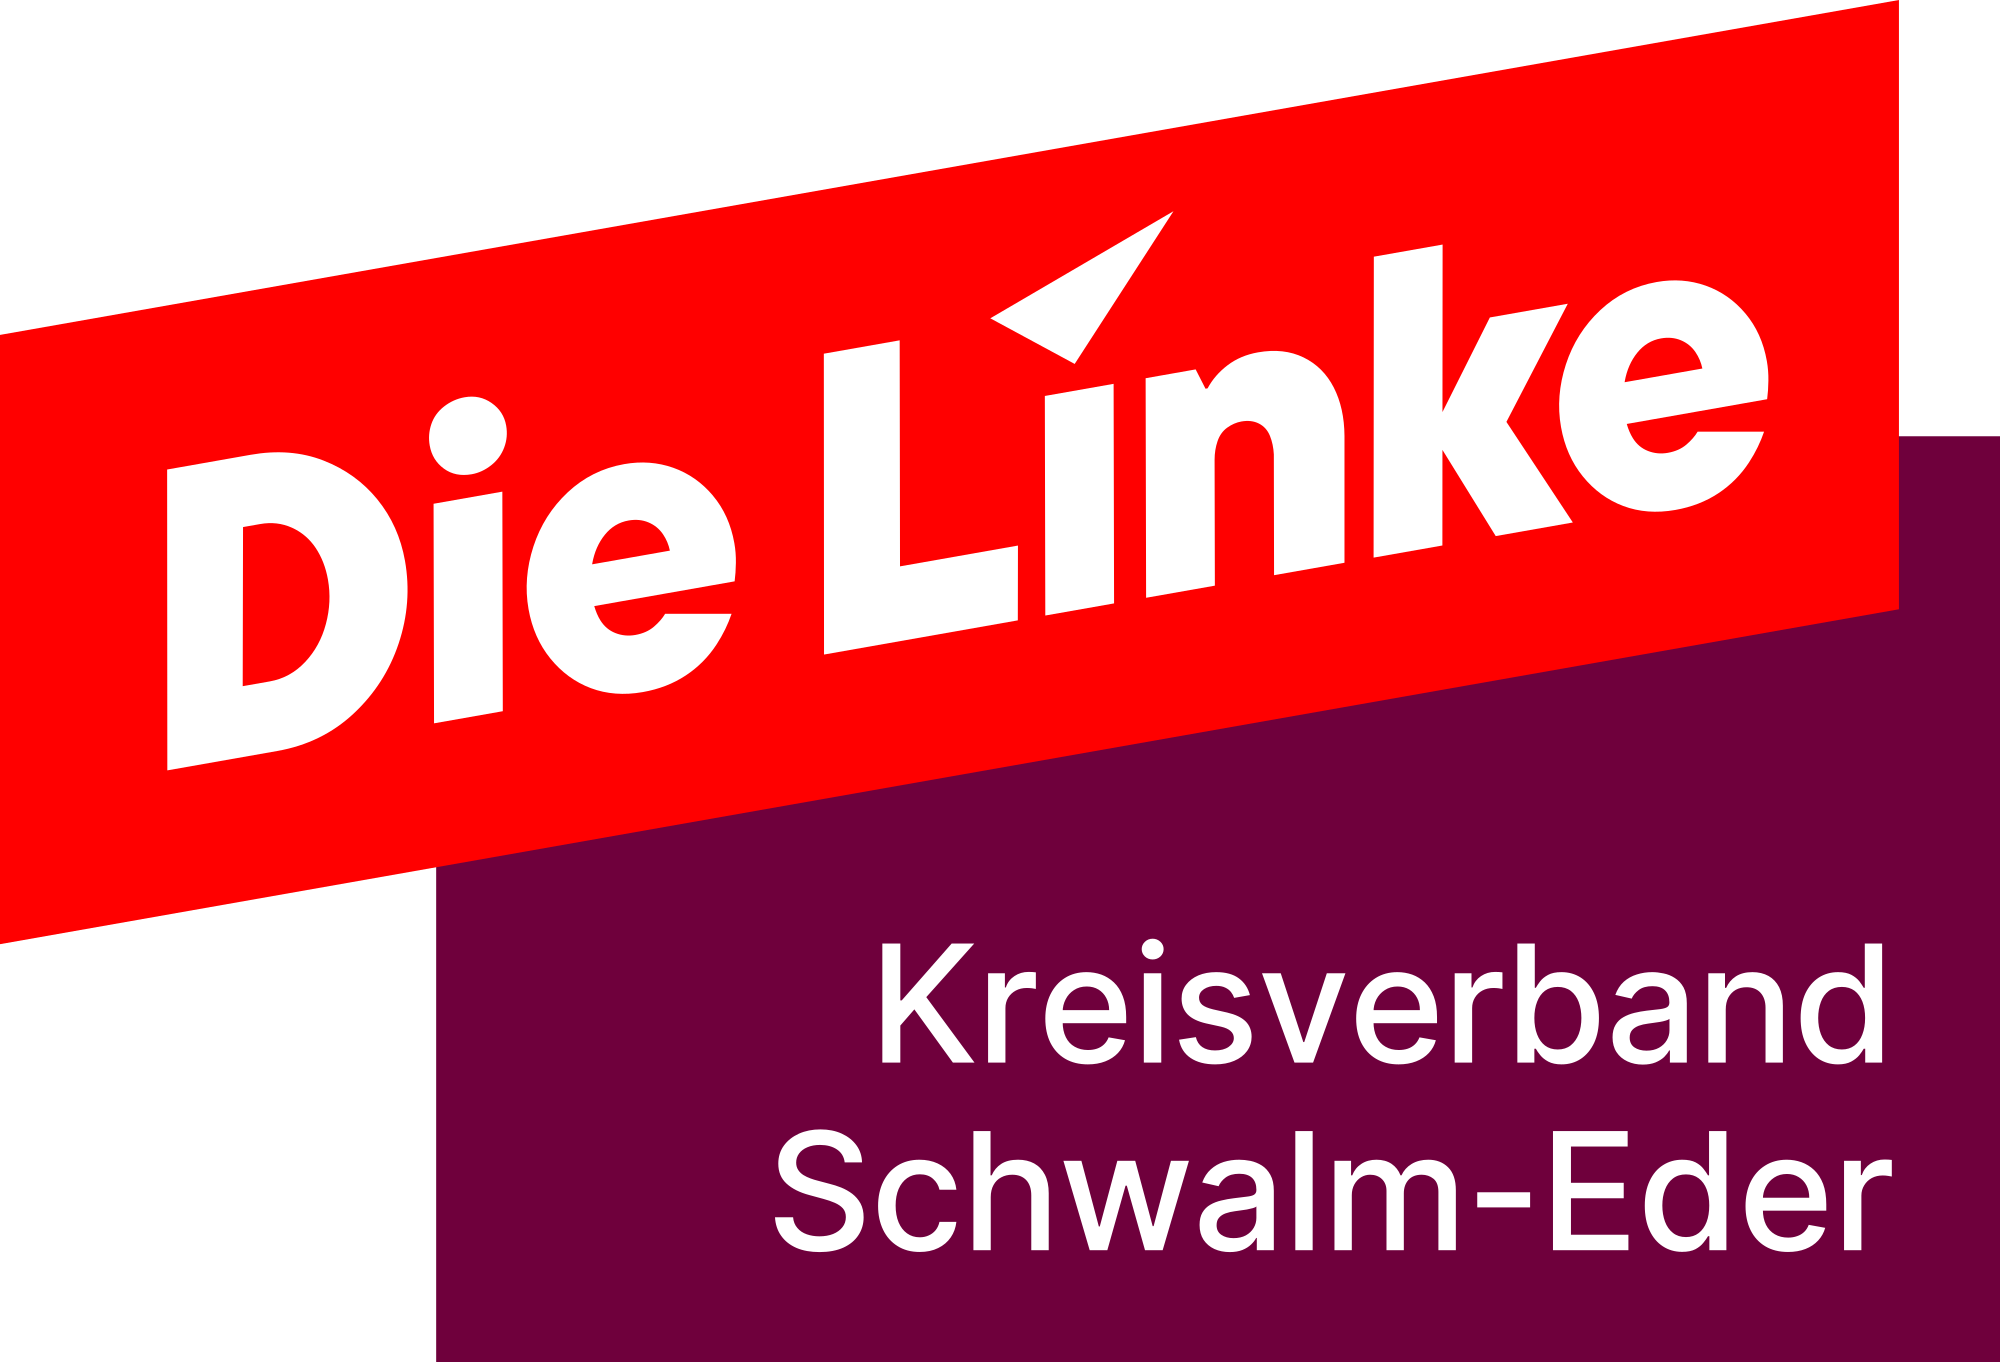 DIE LINKE. Schwalm-Eder